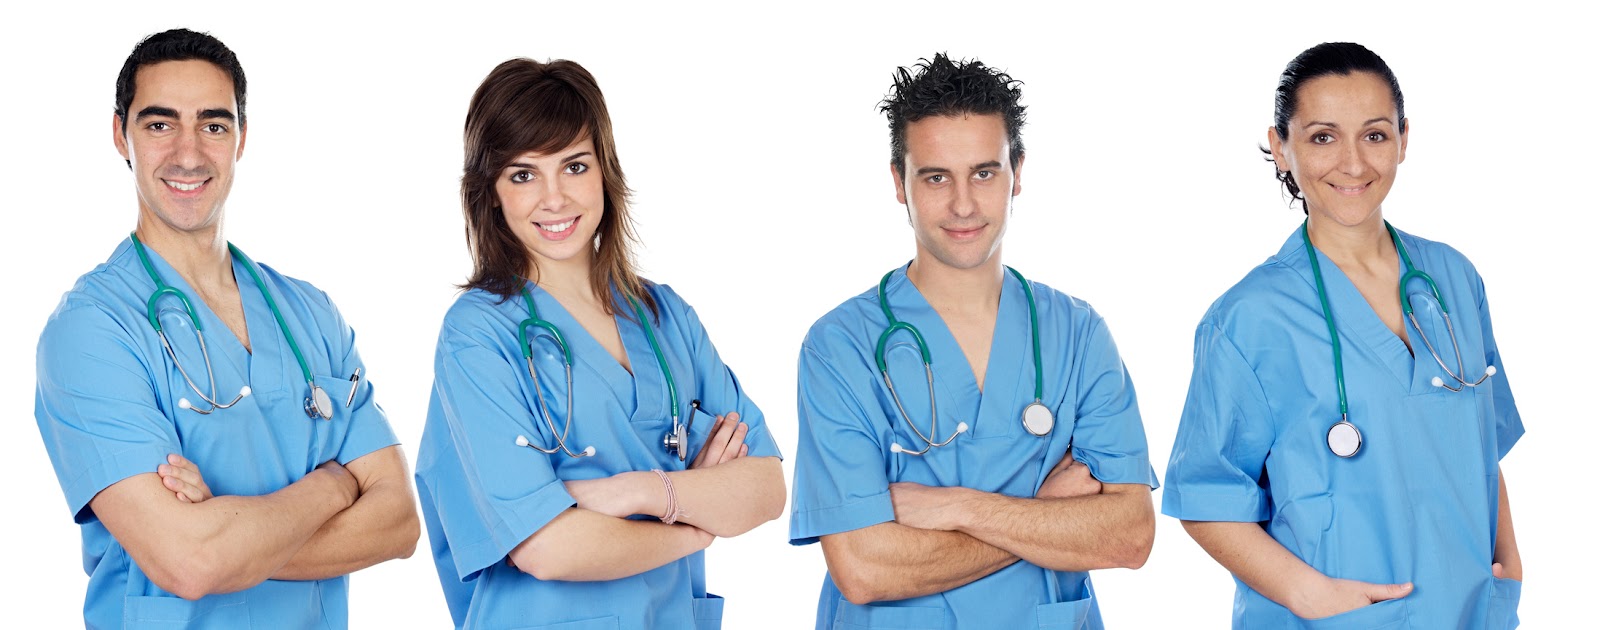 Nurse Hiring Site Nurse Job Hiring In Europe-4405